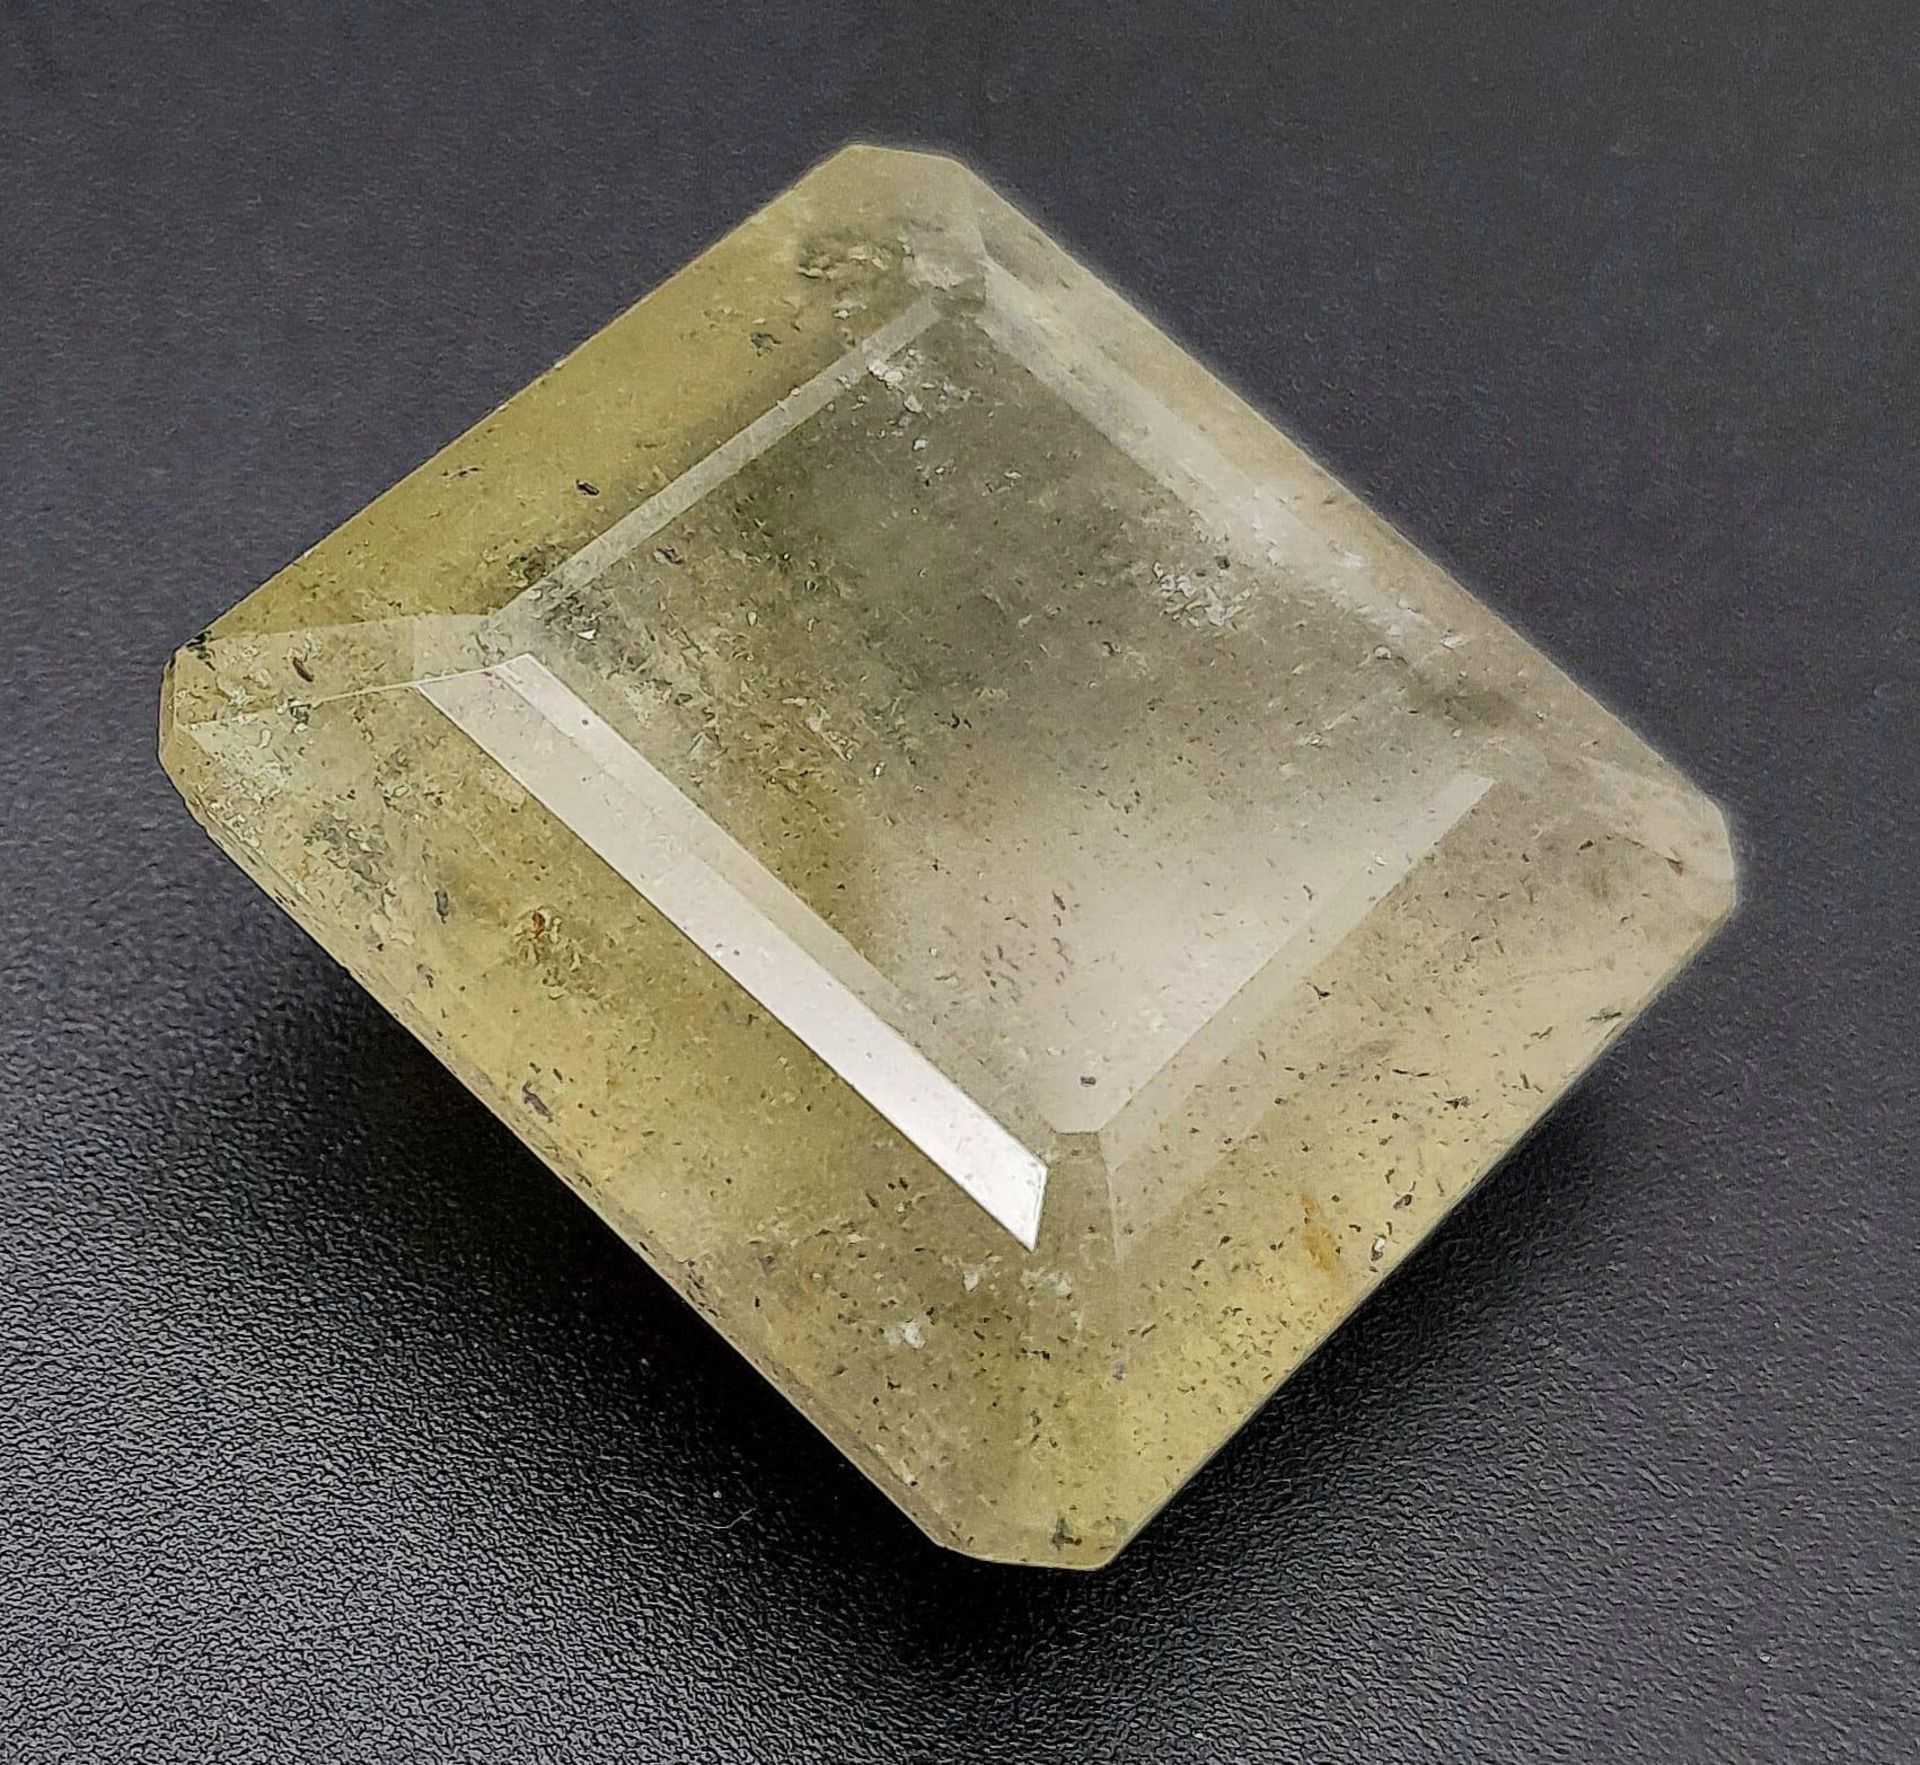 A 72.73ct Madagascar Natural Beryl, Rare Impressive Gemstone. Comes with the AIG Certificate. ref: